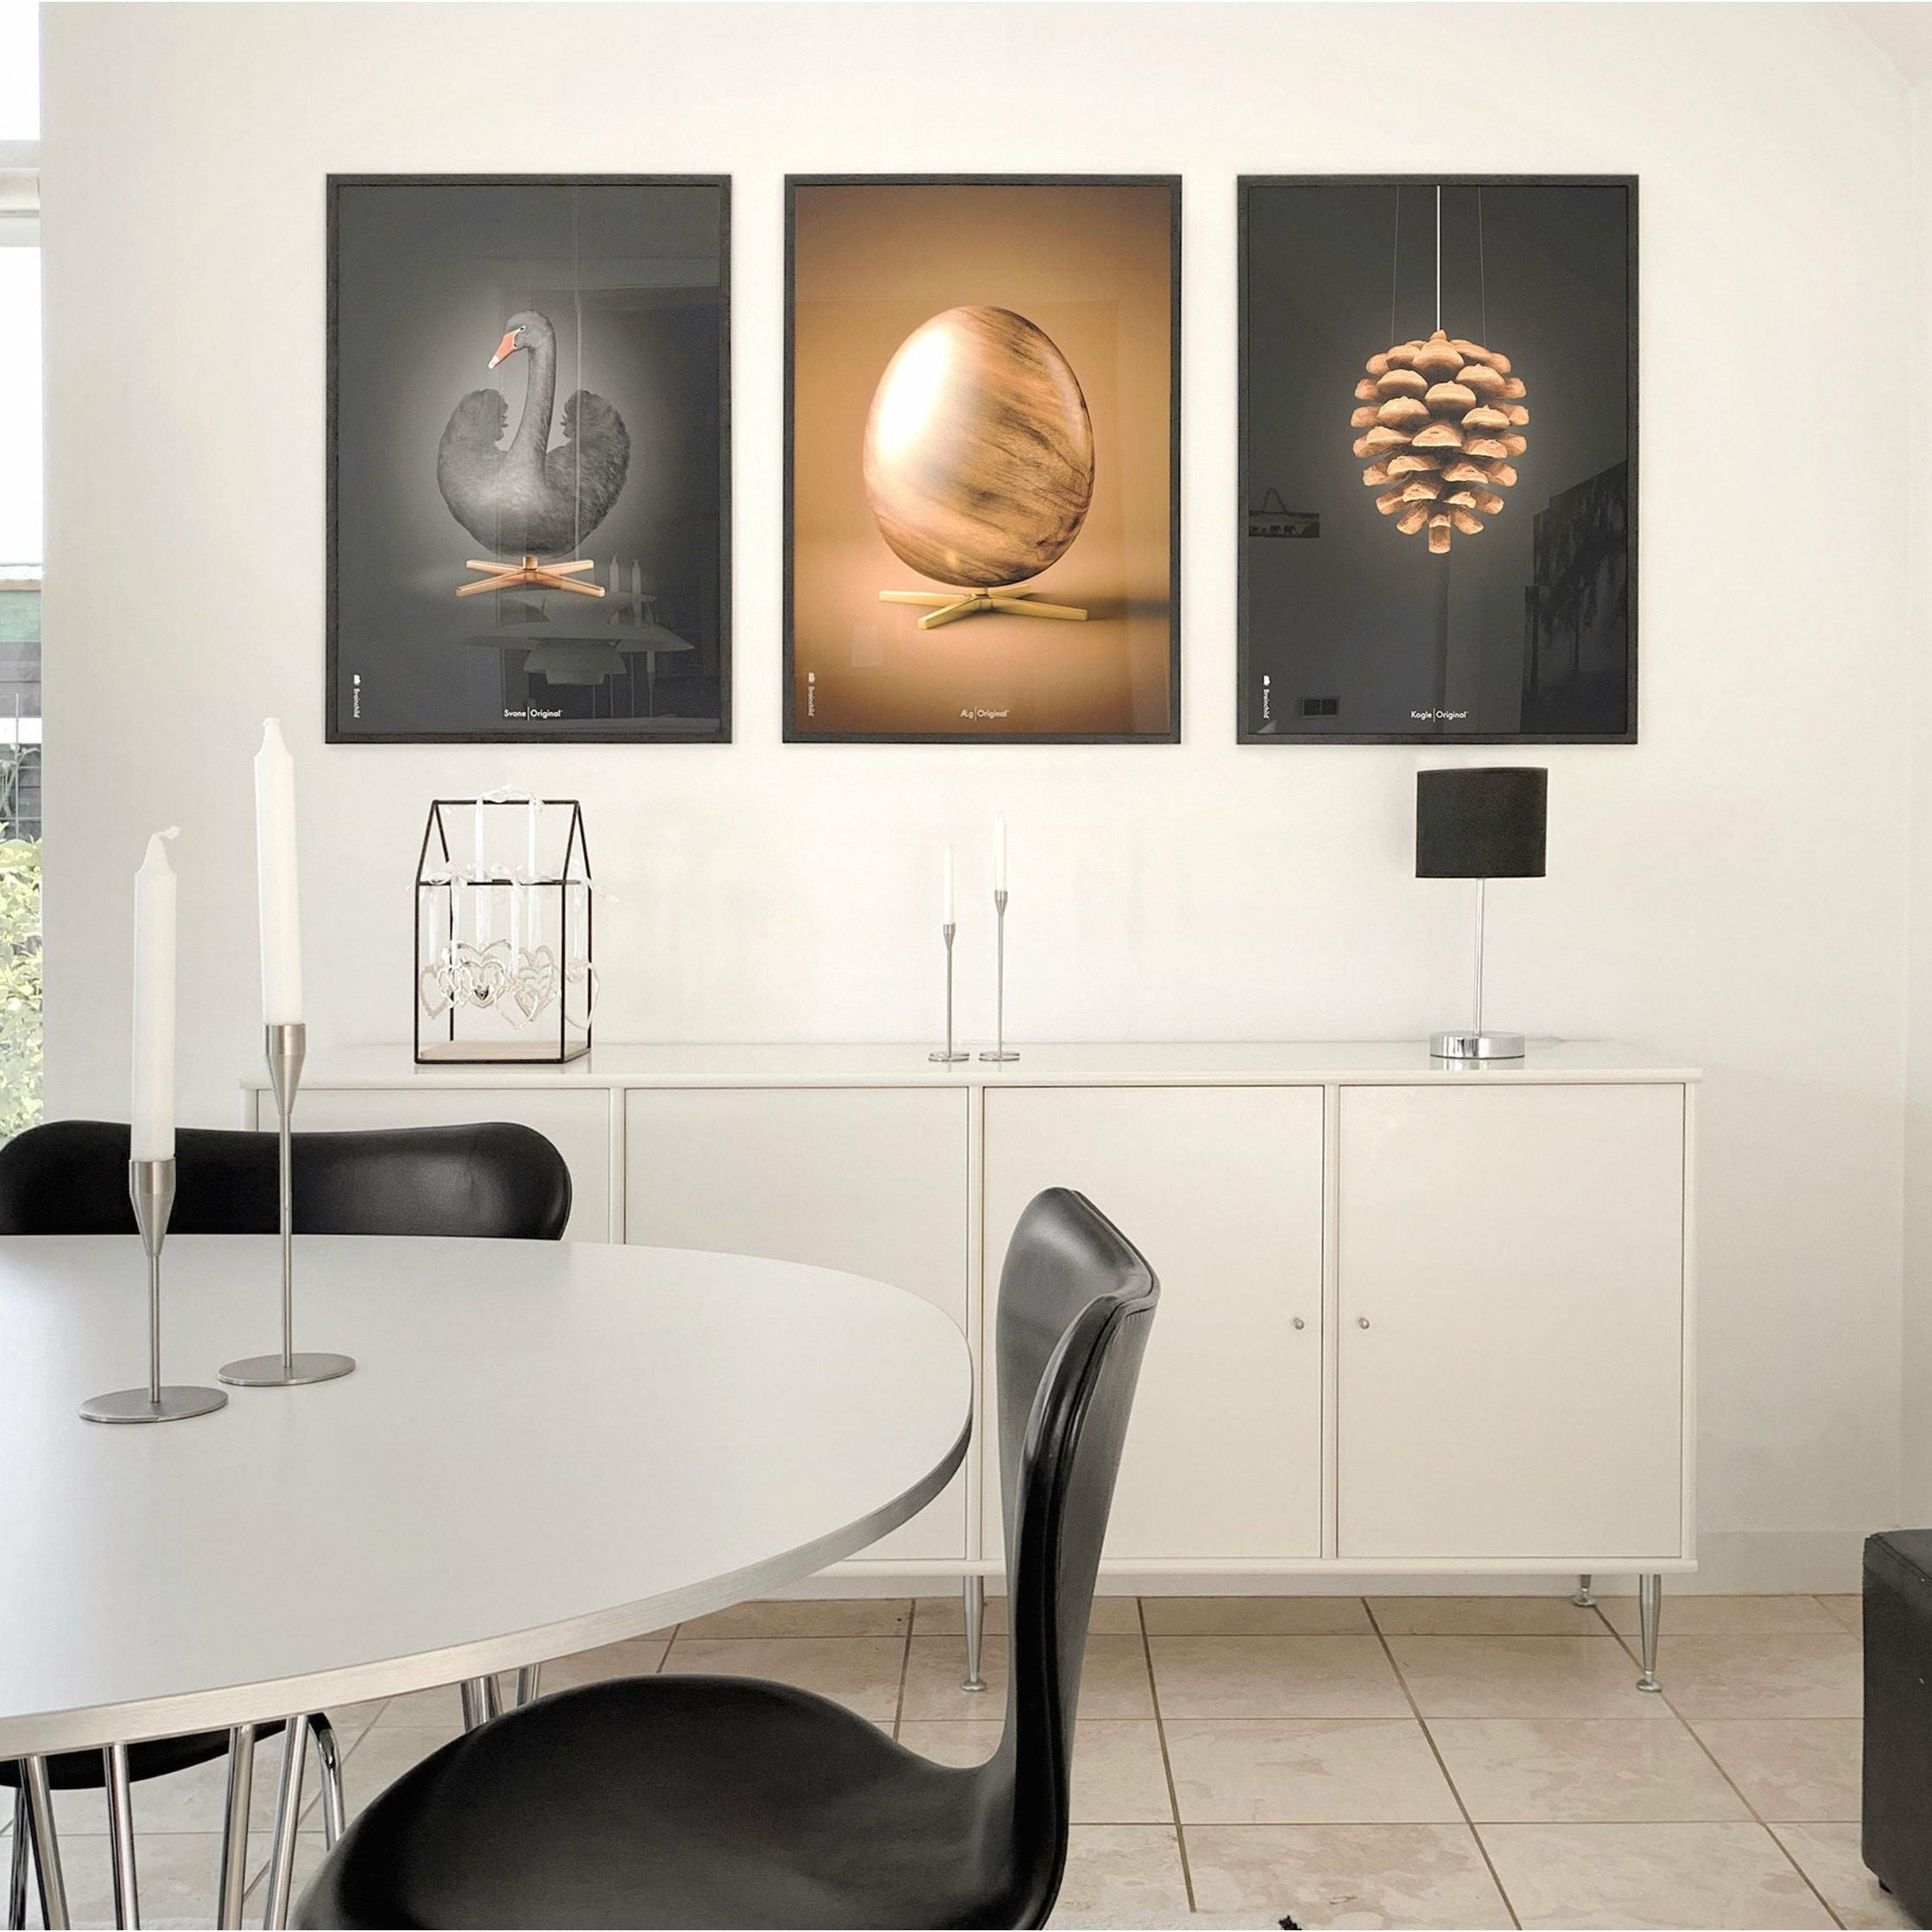 Pomysły Swan Classic Plakat, Light Wood Frame A5, czarne/czarne tło